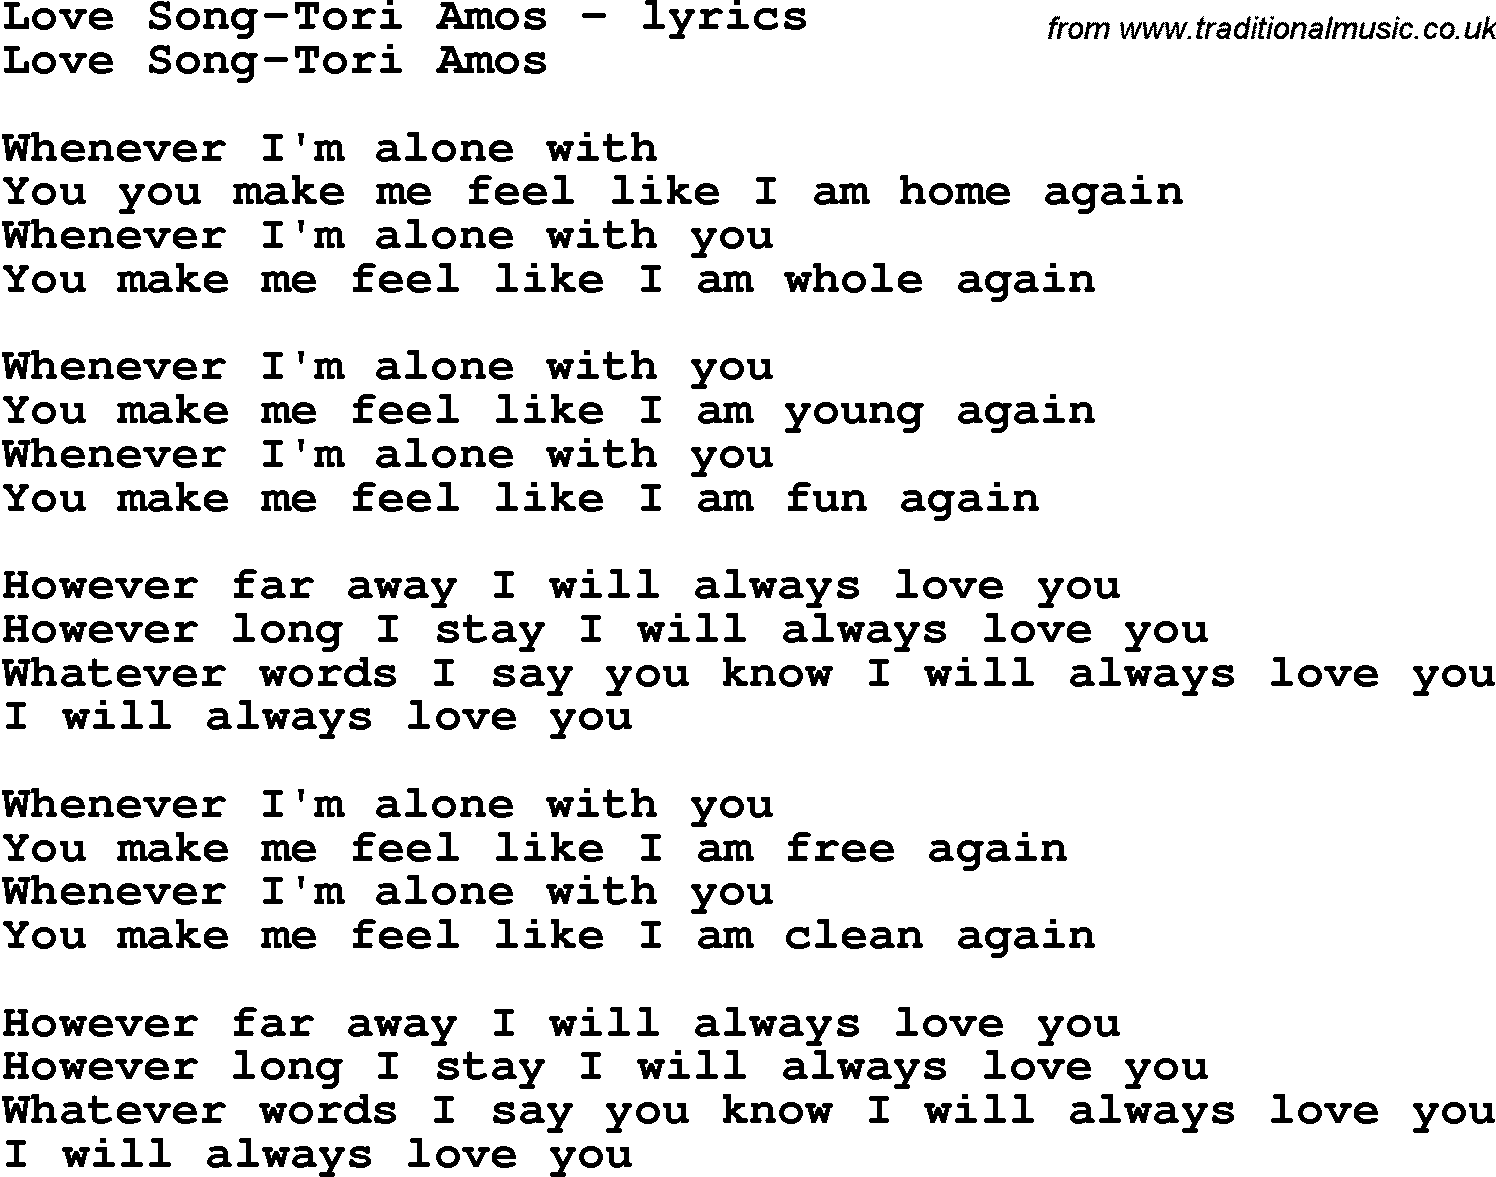 Love Song Lyrics for: Love Song-Tori Amos